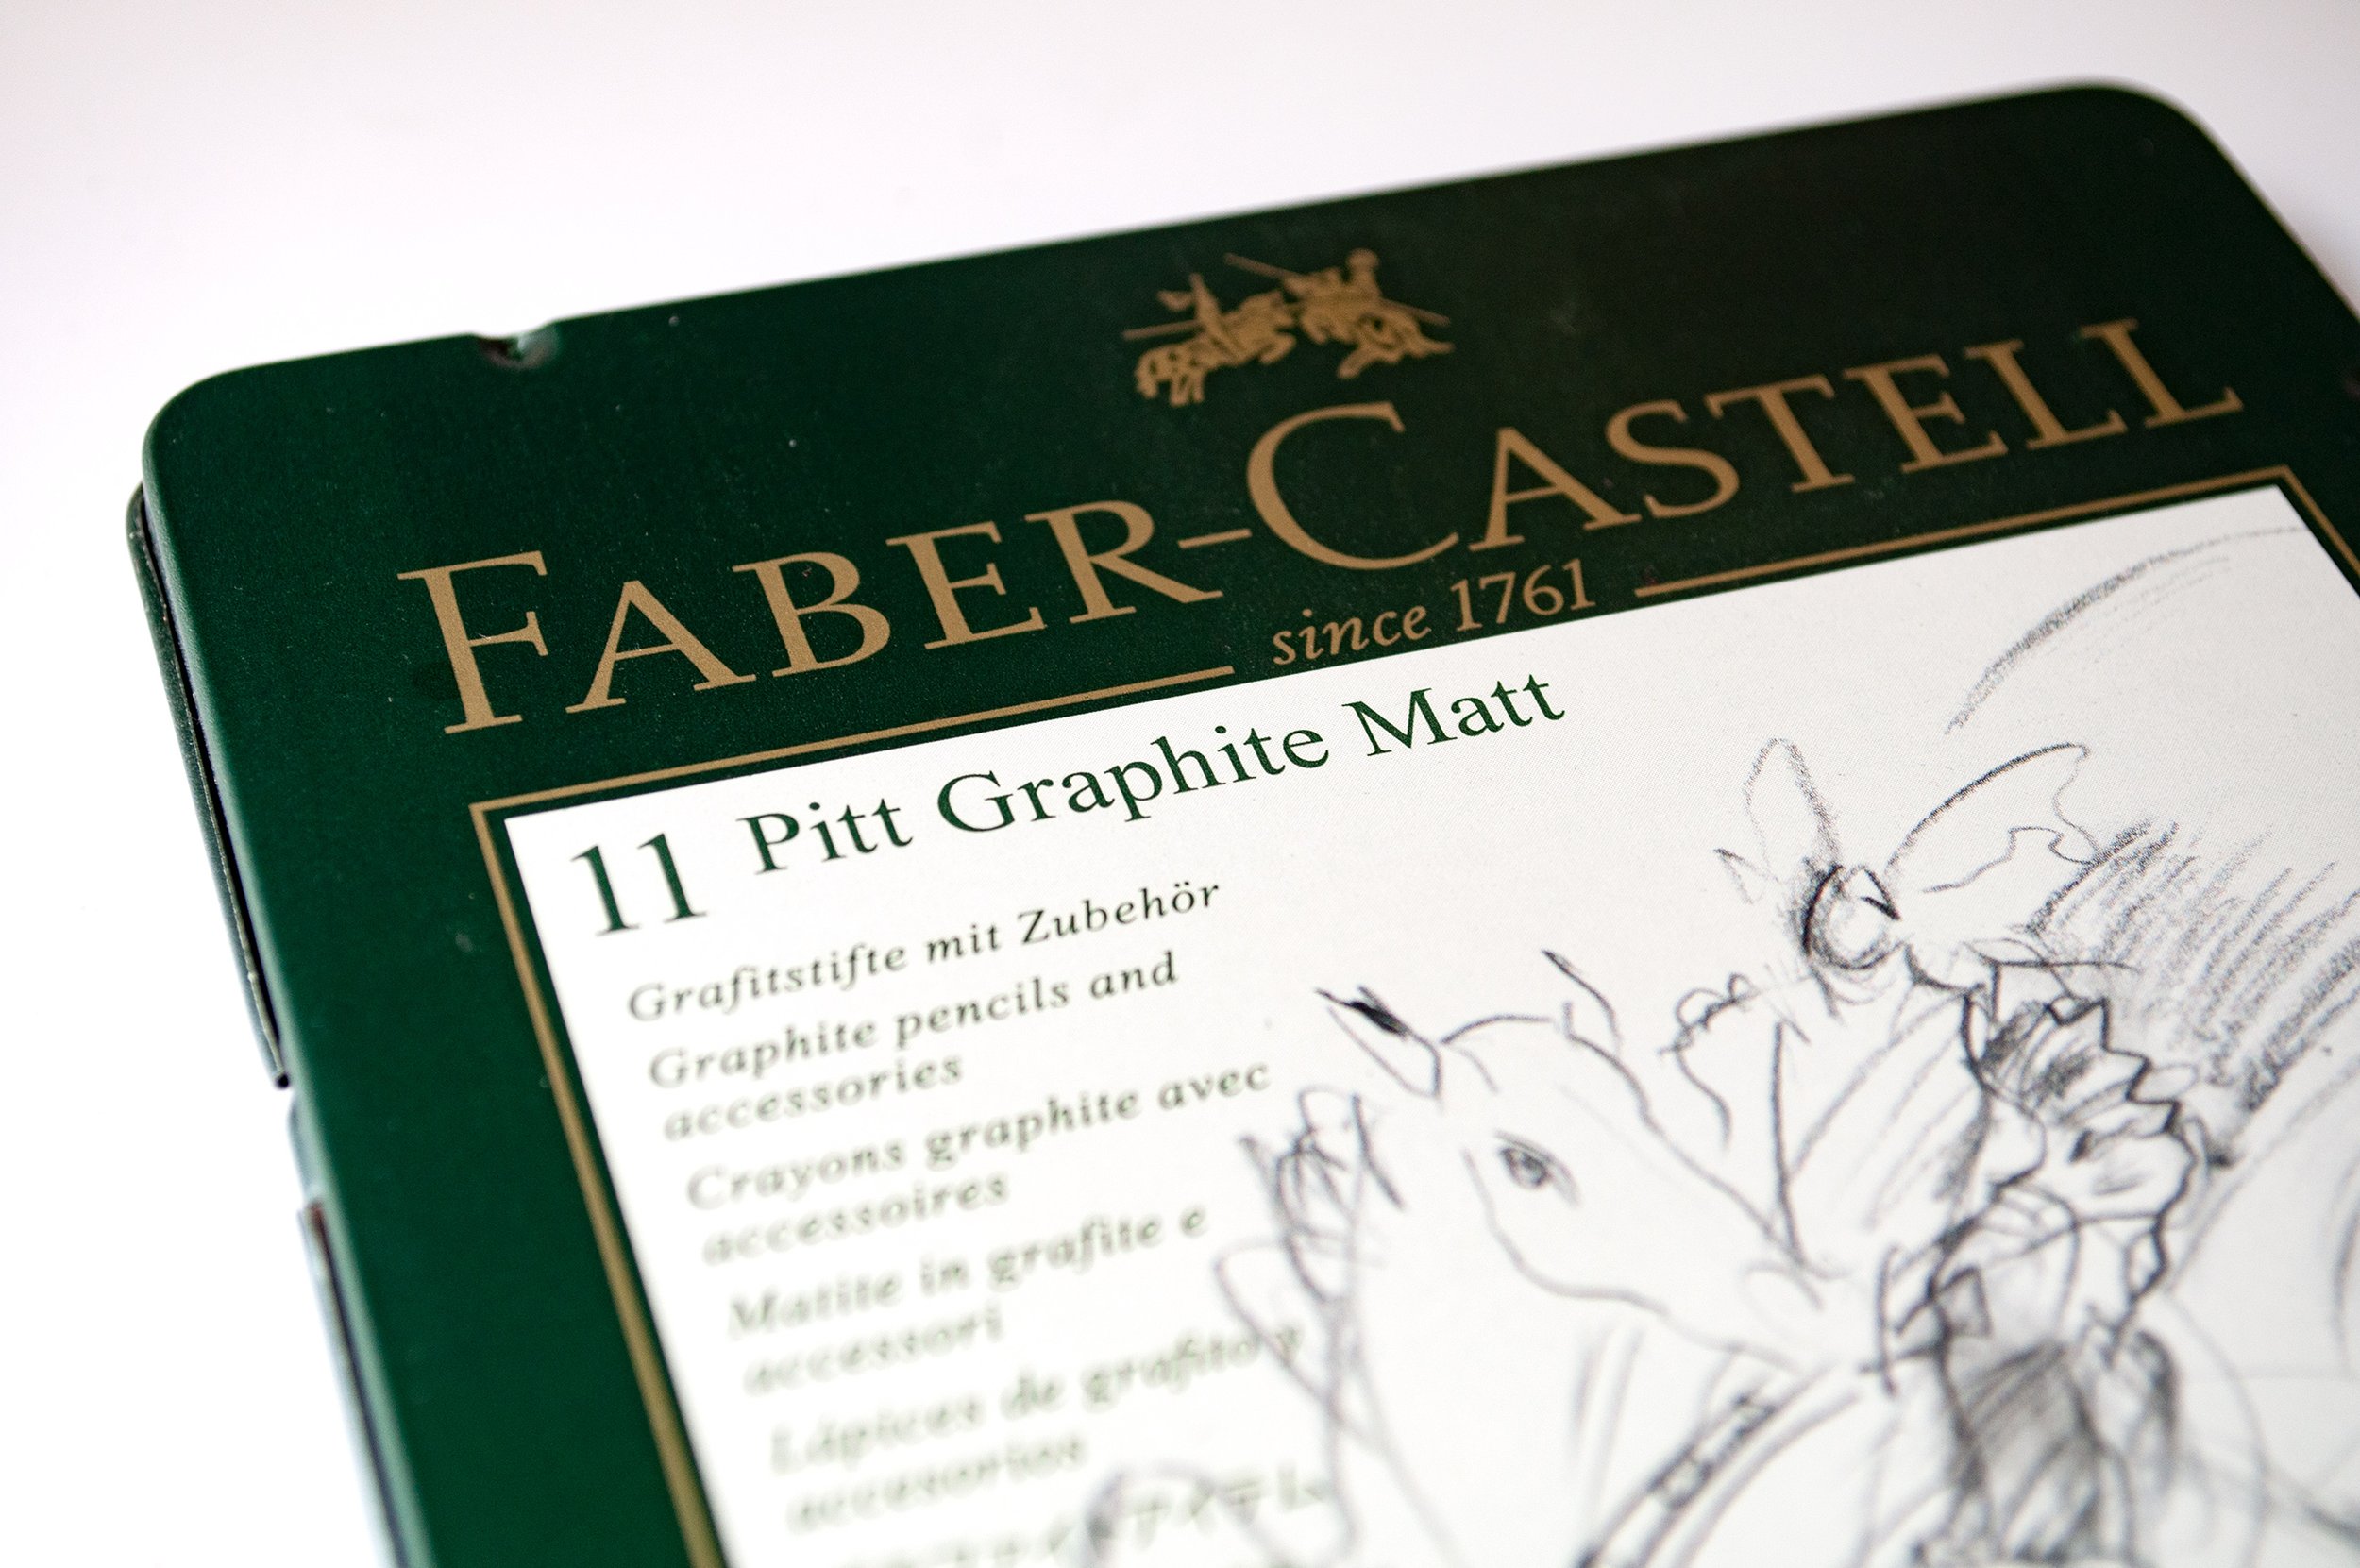 Faber-Castell 9000 Graphite Sketch Pencil Sets Art 8B - 2H set of 12 